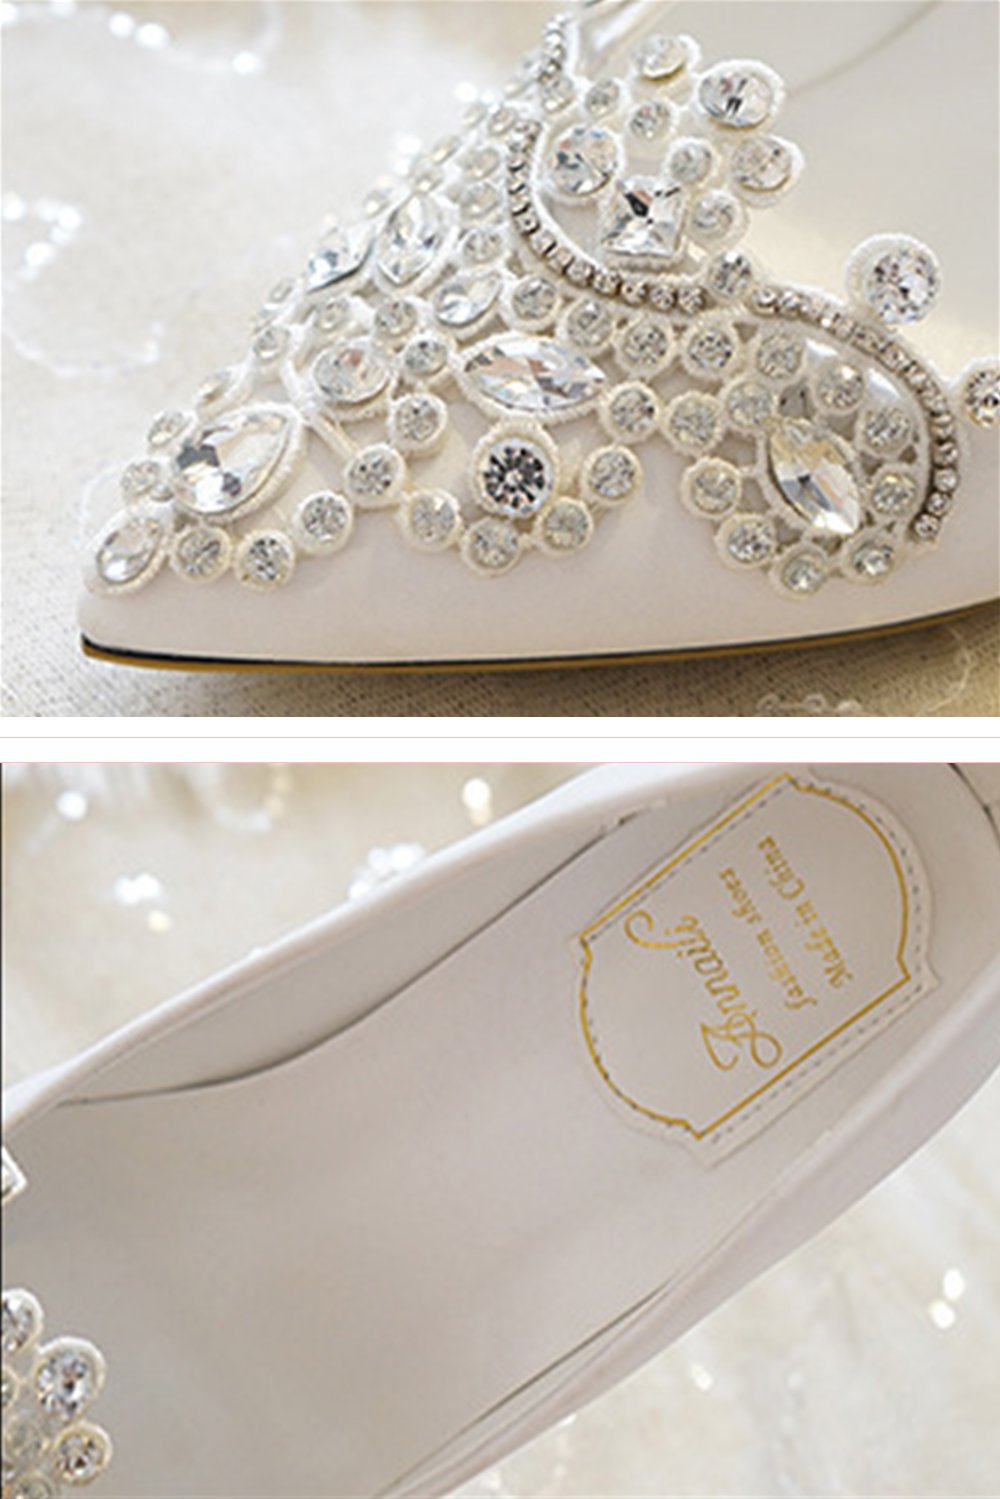 Stiletto Heel 9cm Satin Heels Bridal Shoes CK0128